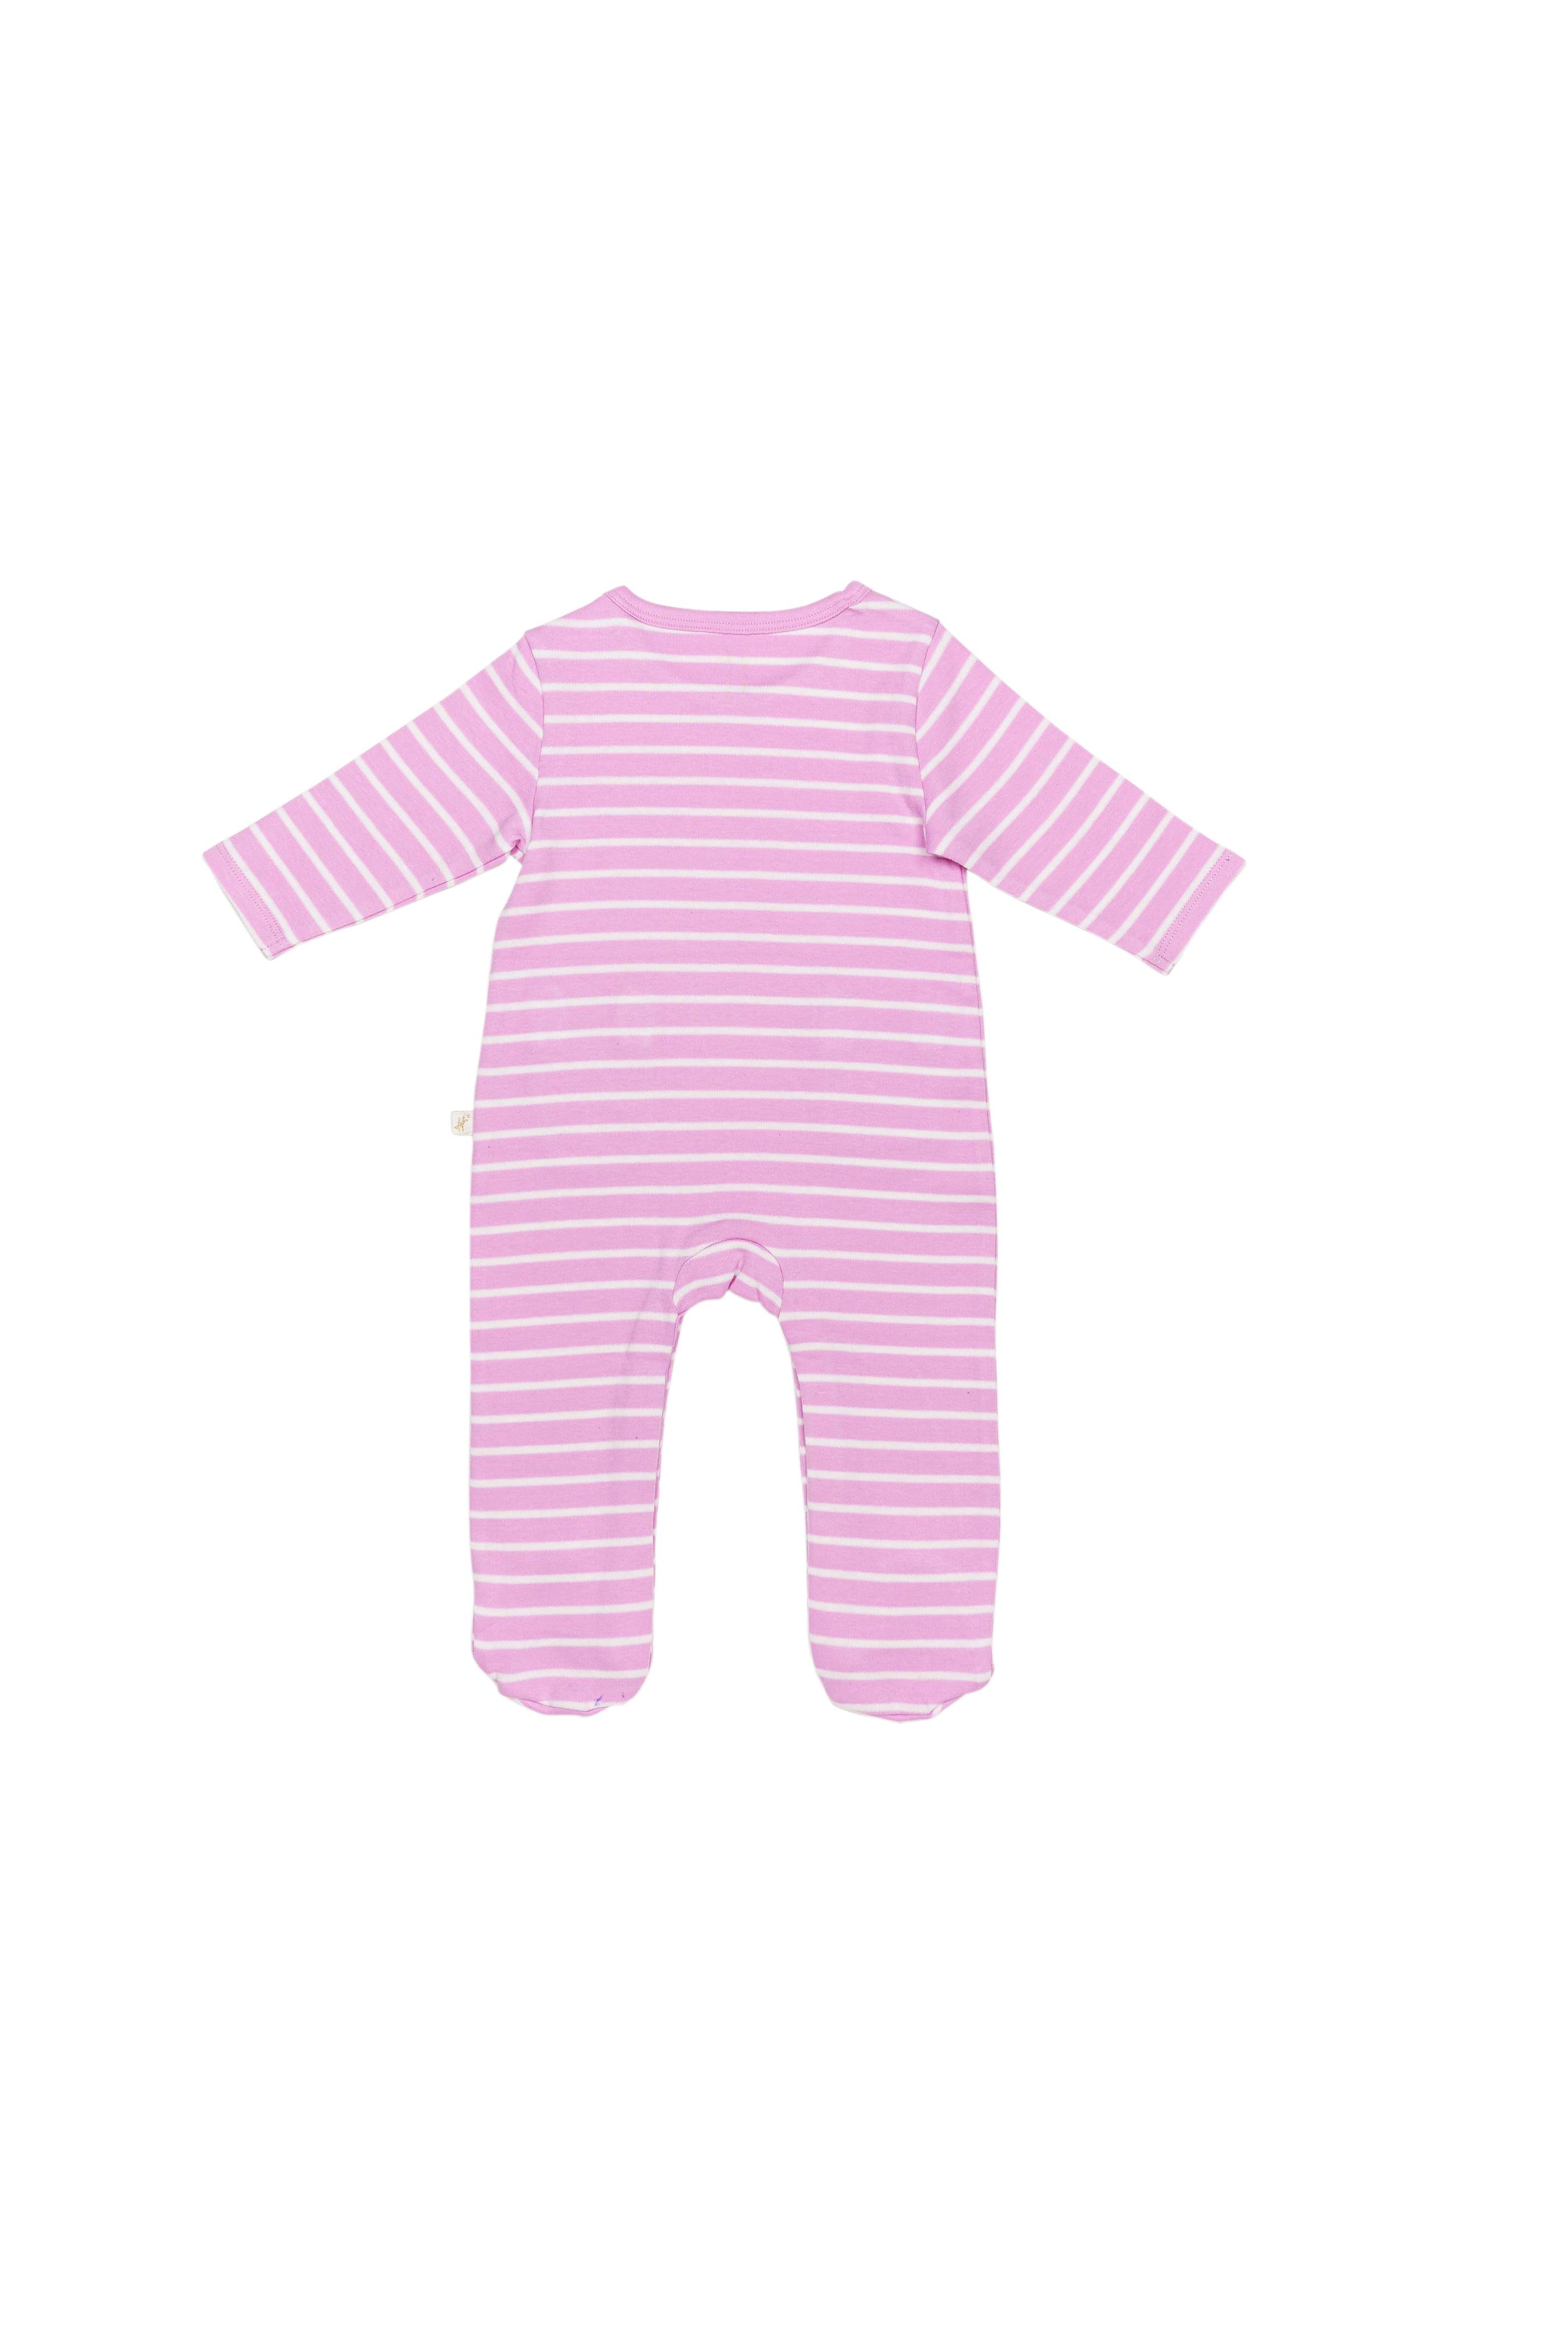 H by Hamleys Unisex Kids Striped Pink Sleepsuit